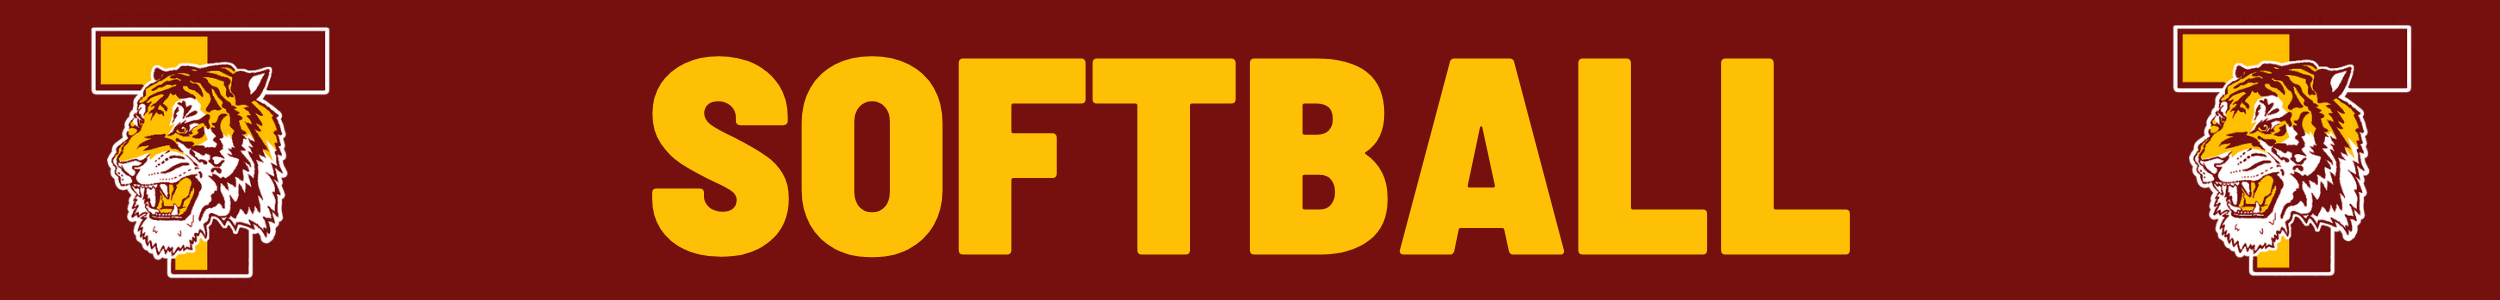 Softball With T Tiger Logos